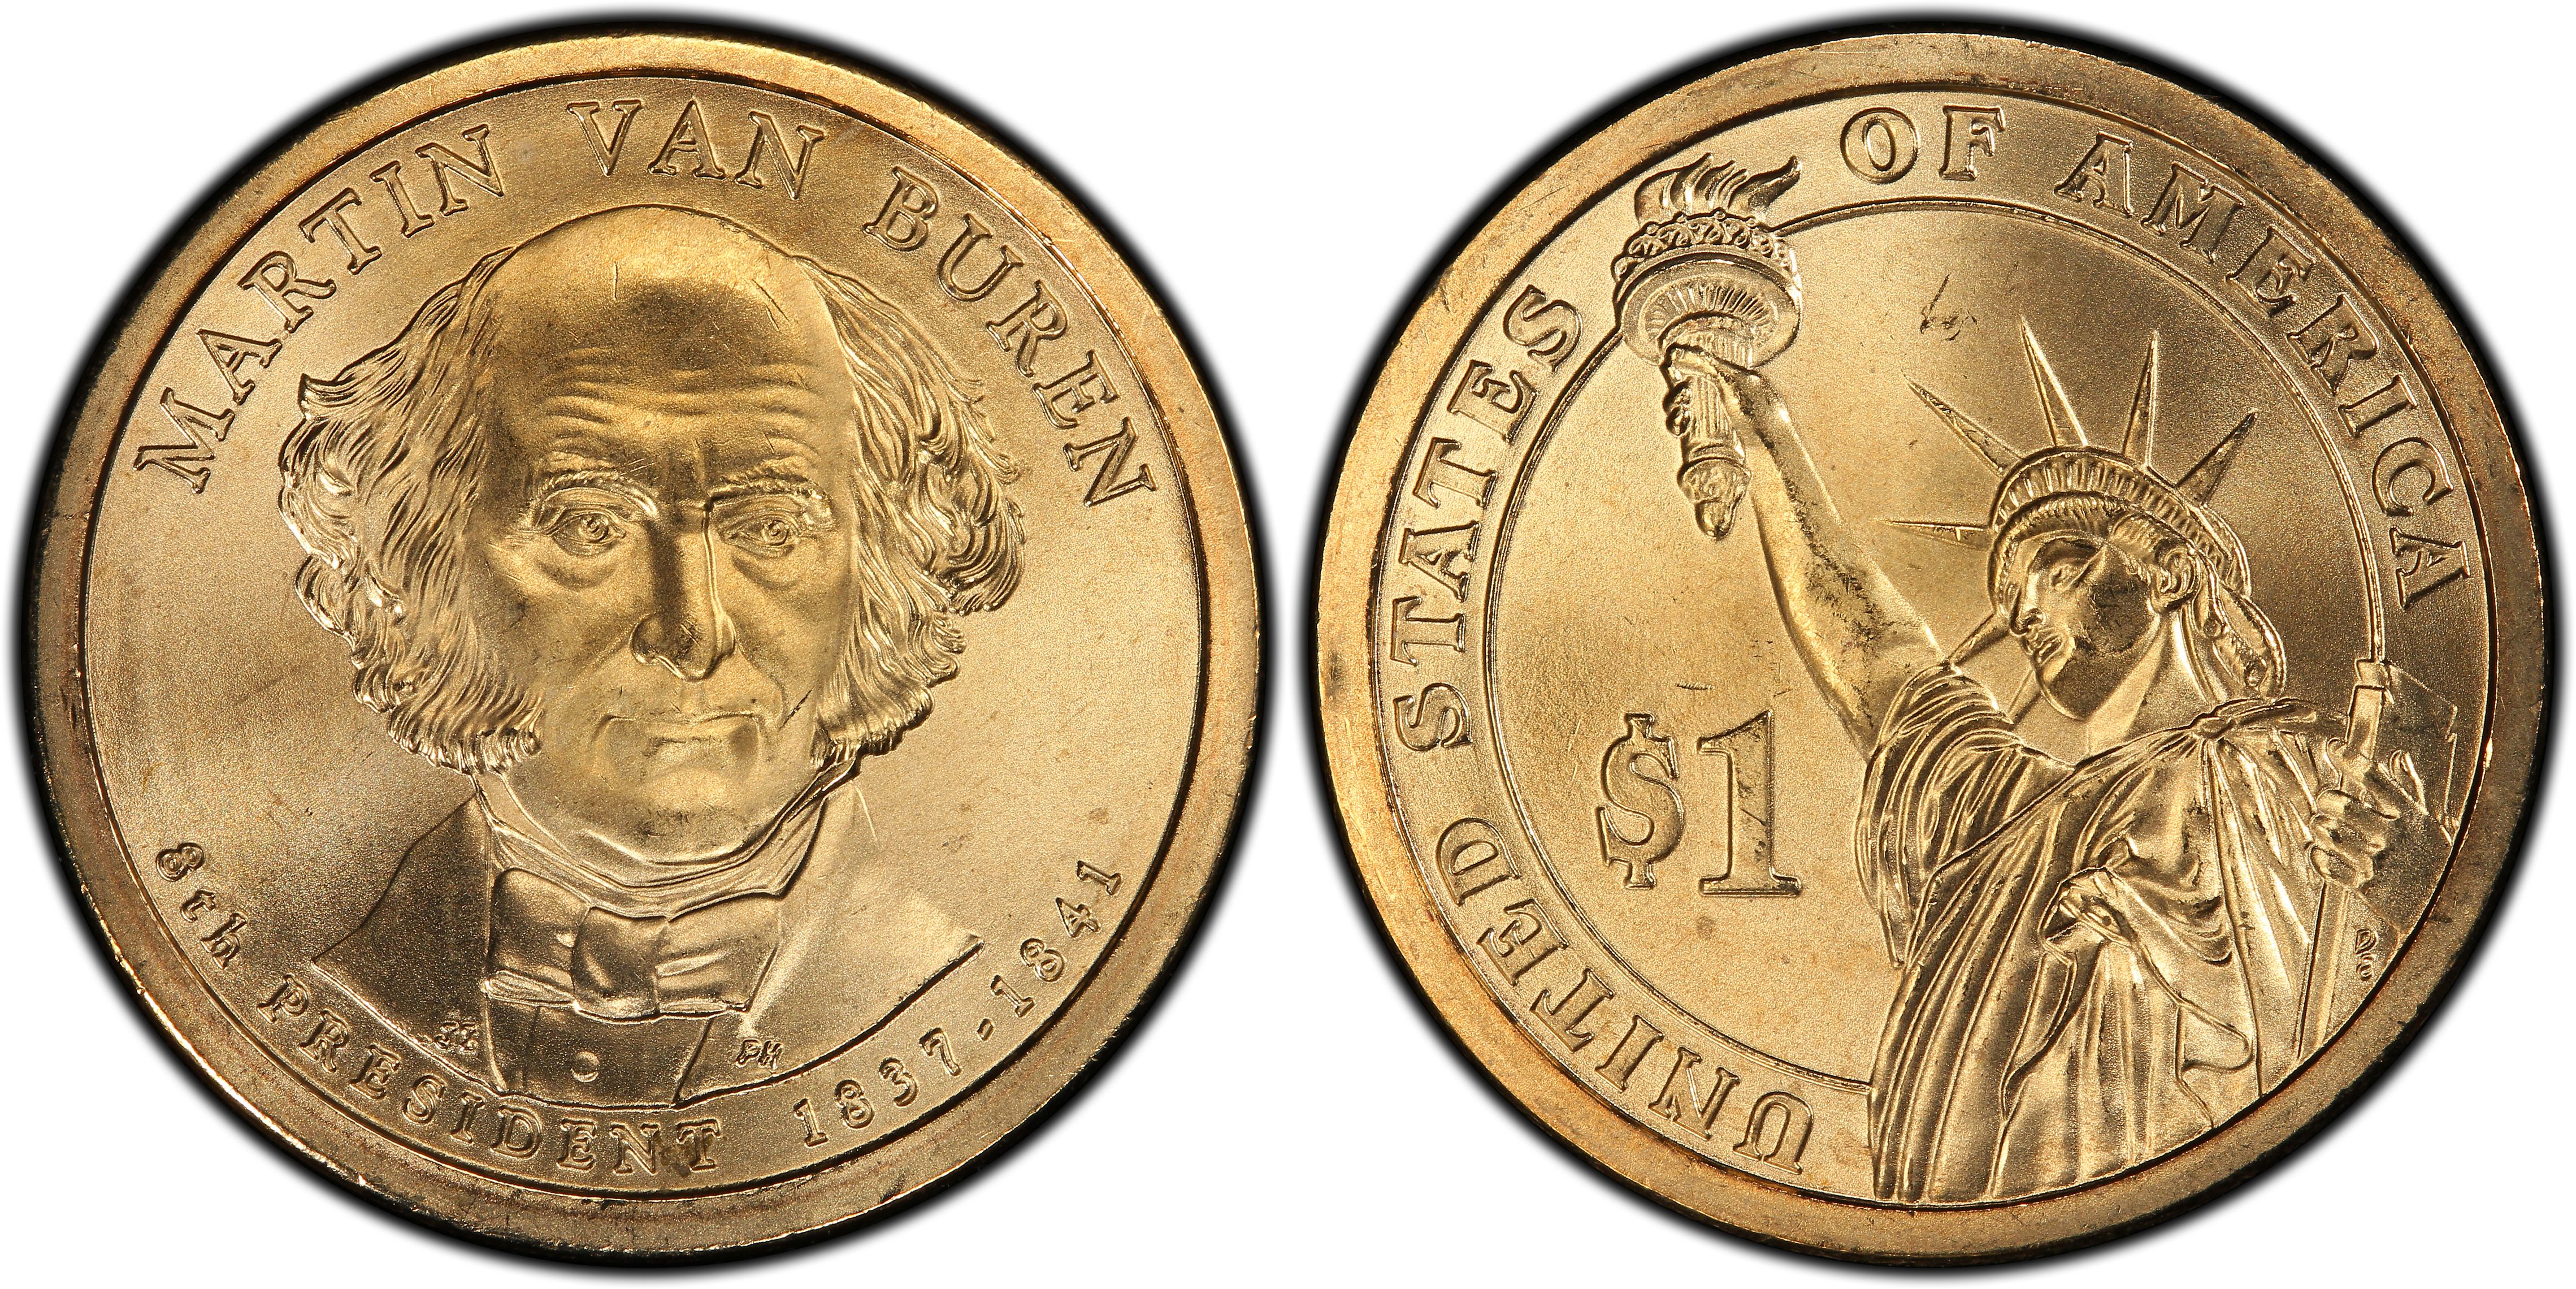 2008 P&D Martin Van Buren Presidential One Dollar Coin President U.S Mint Money 